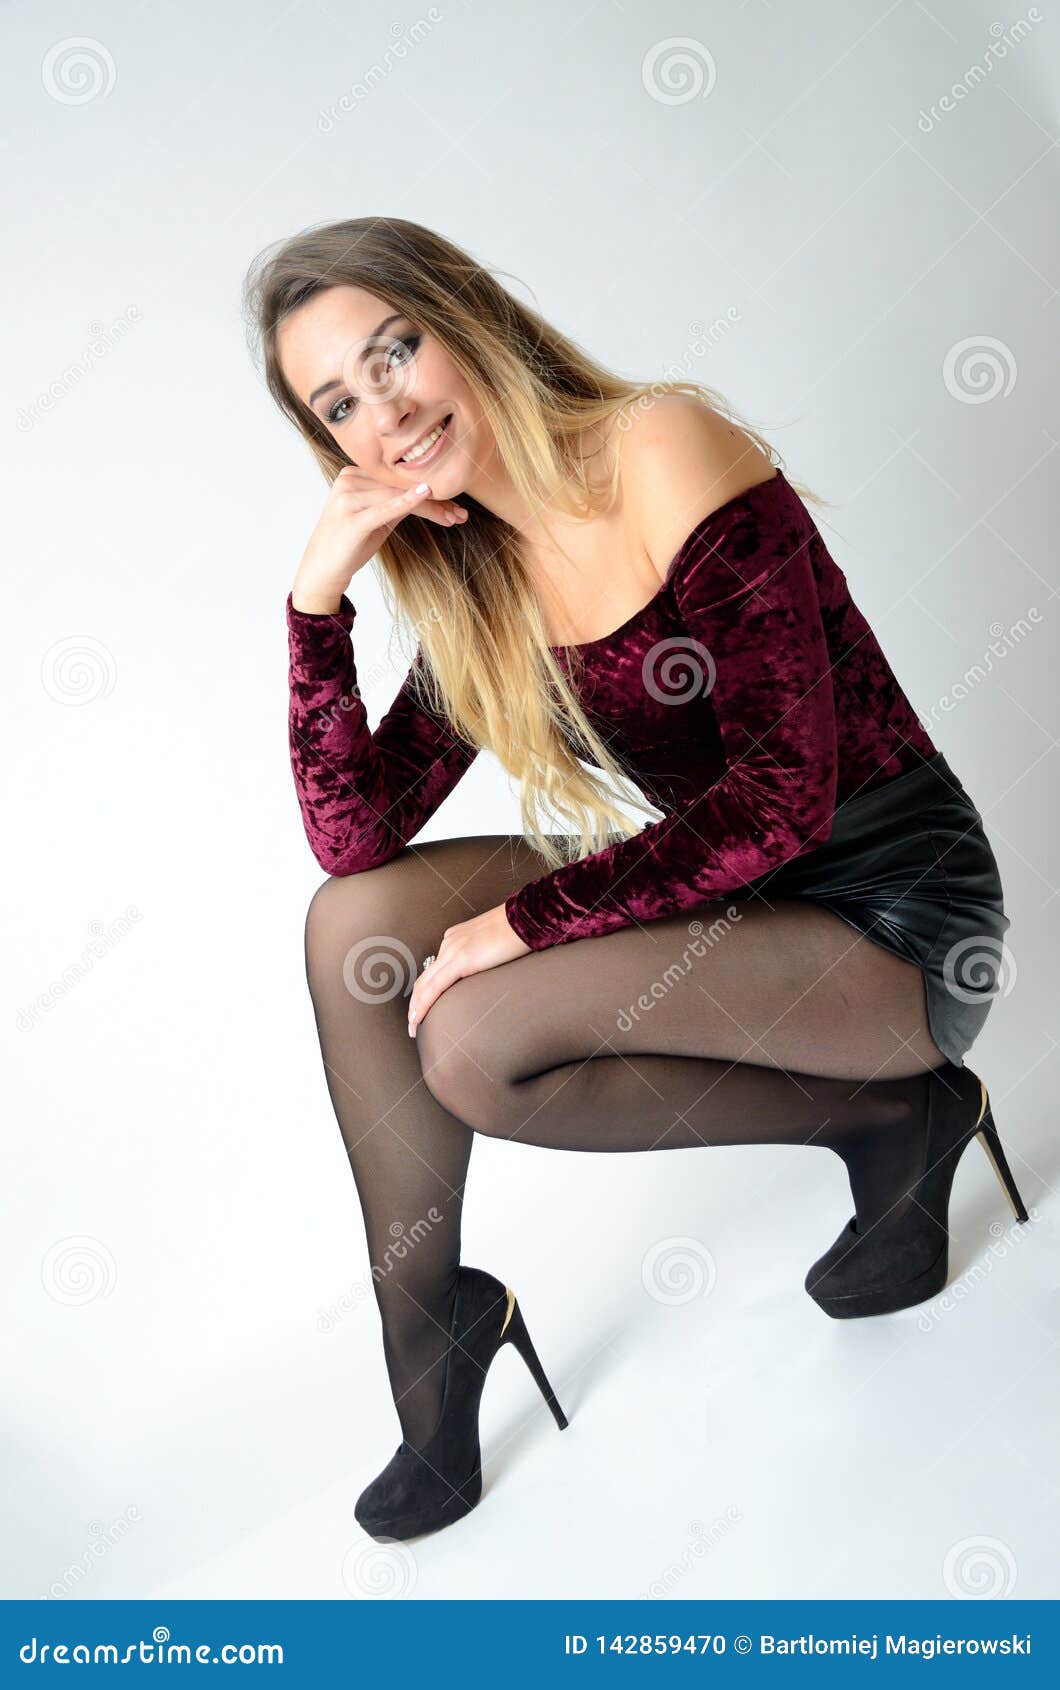 https://thumbs.dreamstime.com/z/well-built-girl-stockings-beautiful-polish-model-maroon-top-black-shorts-high-heels-142859470.jpg